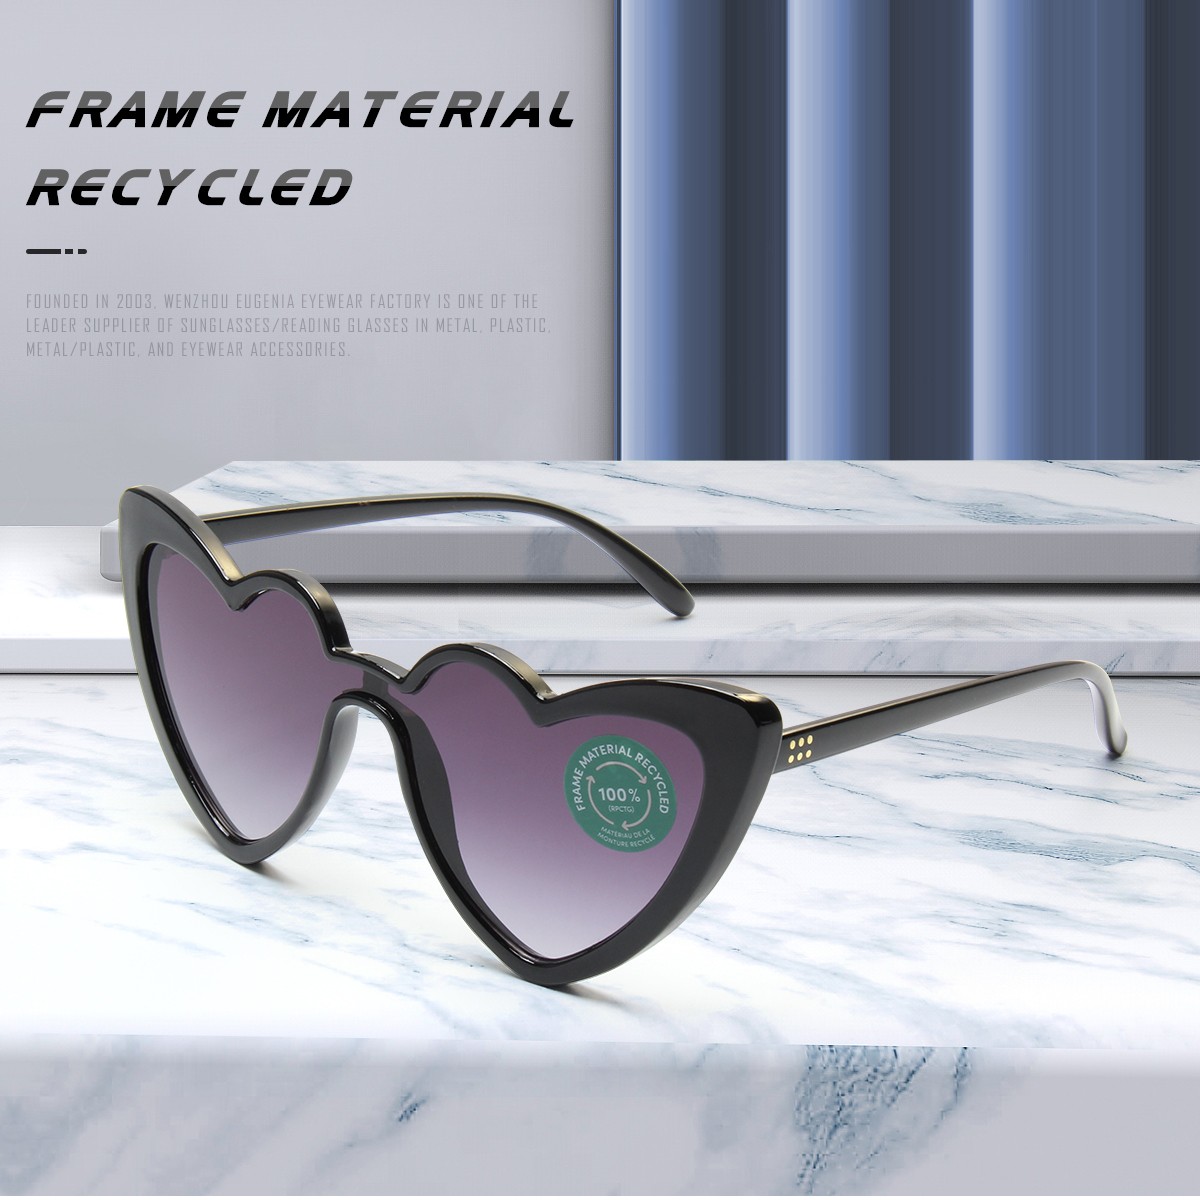 worldwide recycled sunglasses wholesale overseas market bulk buy-1